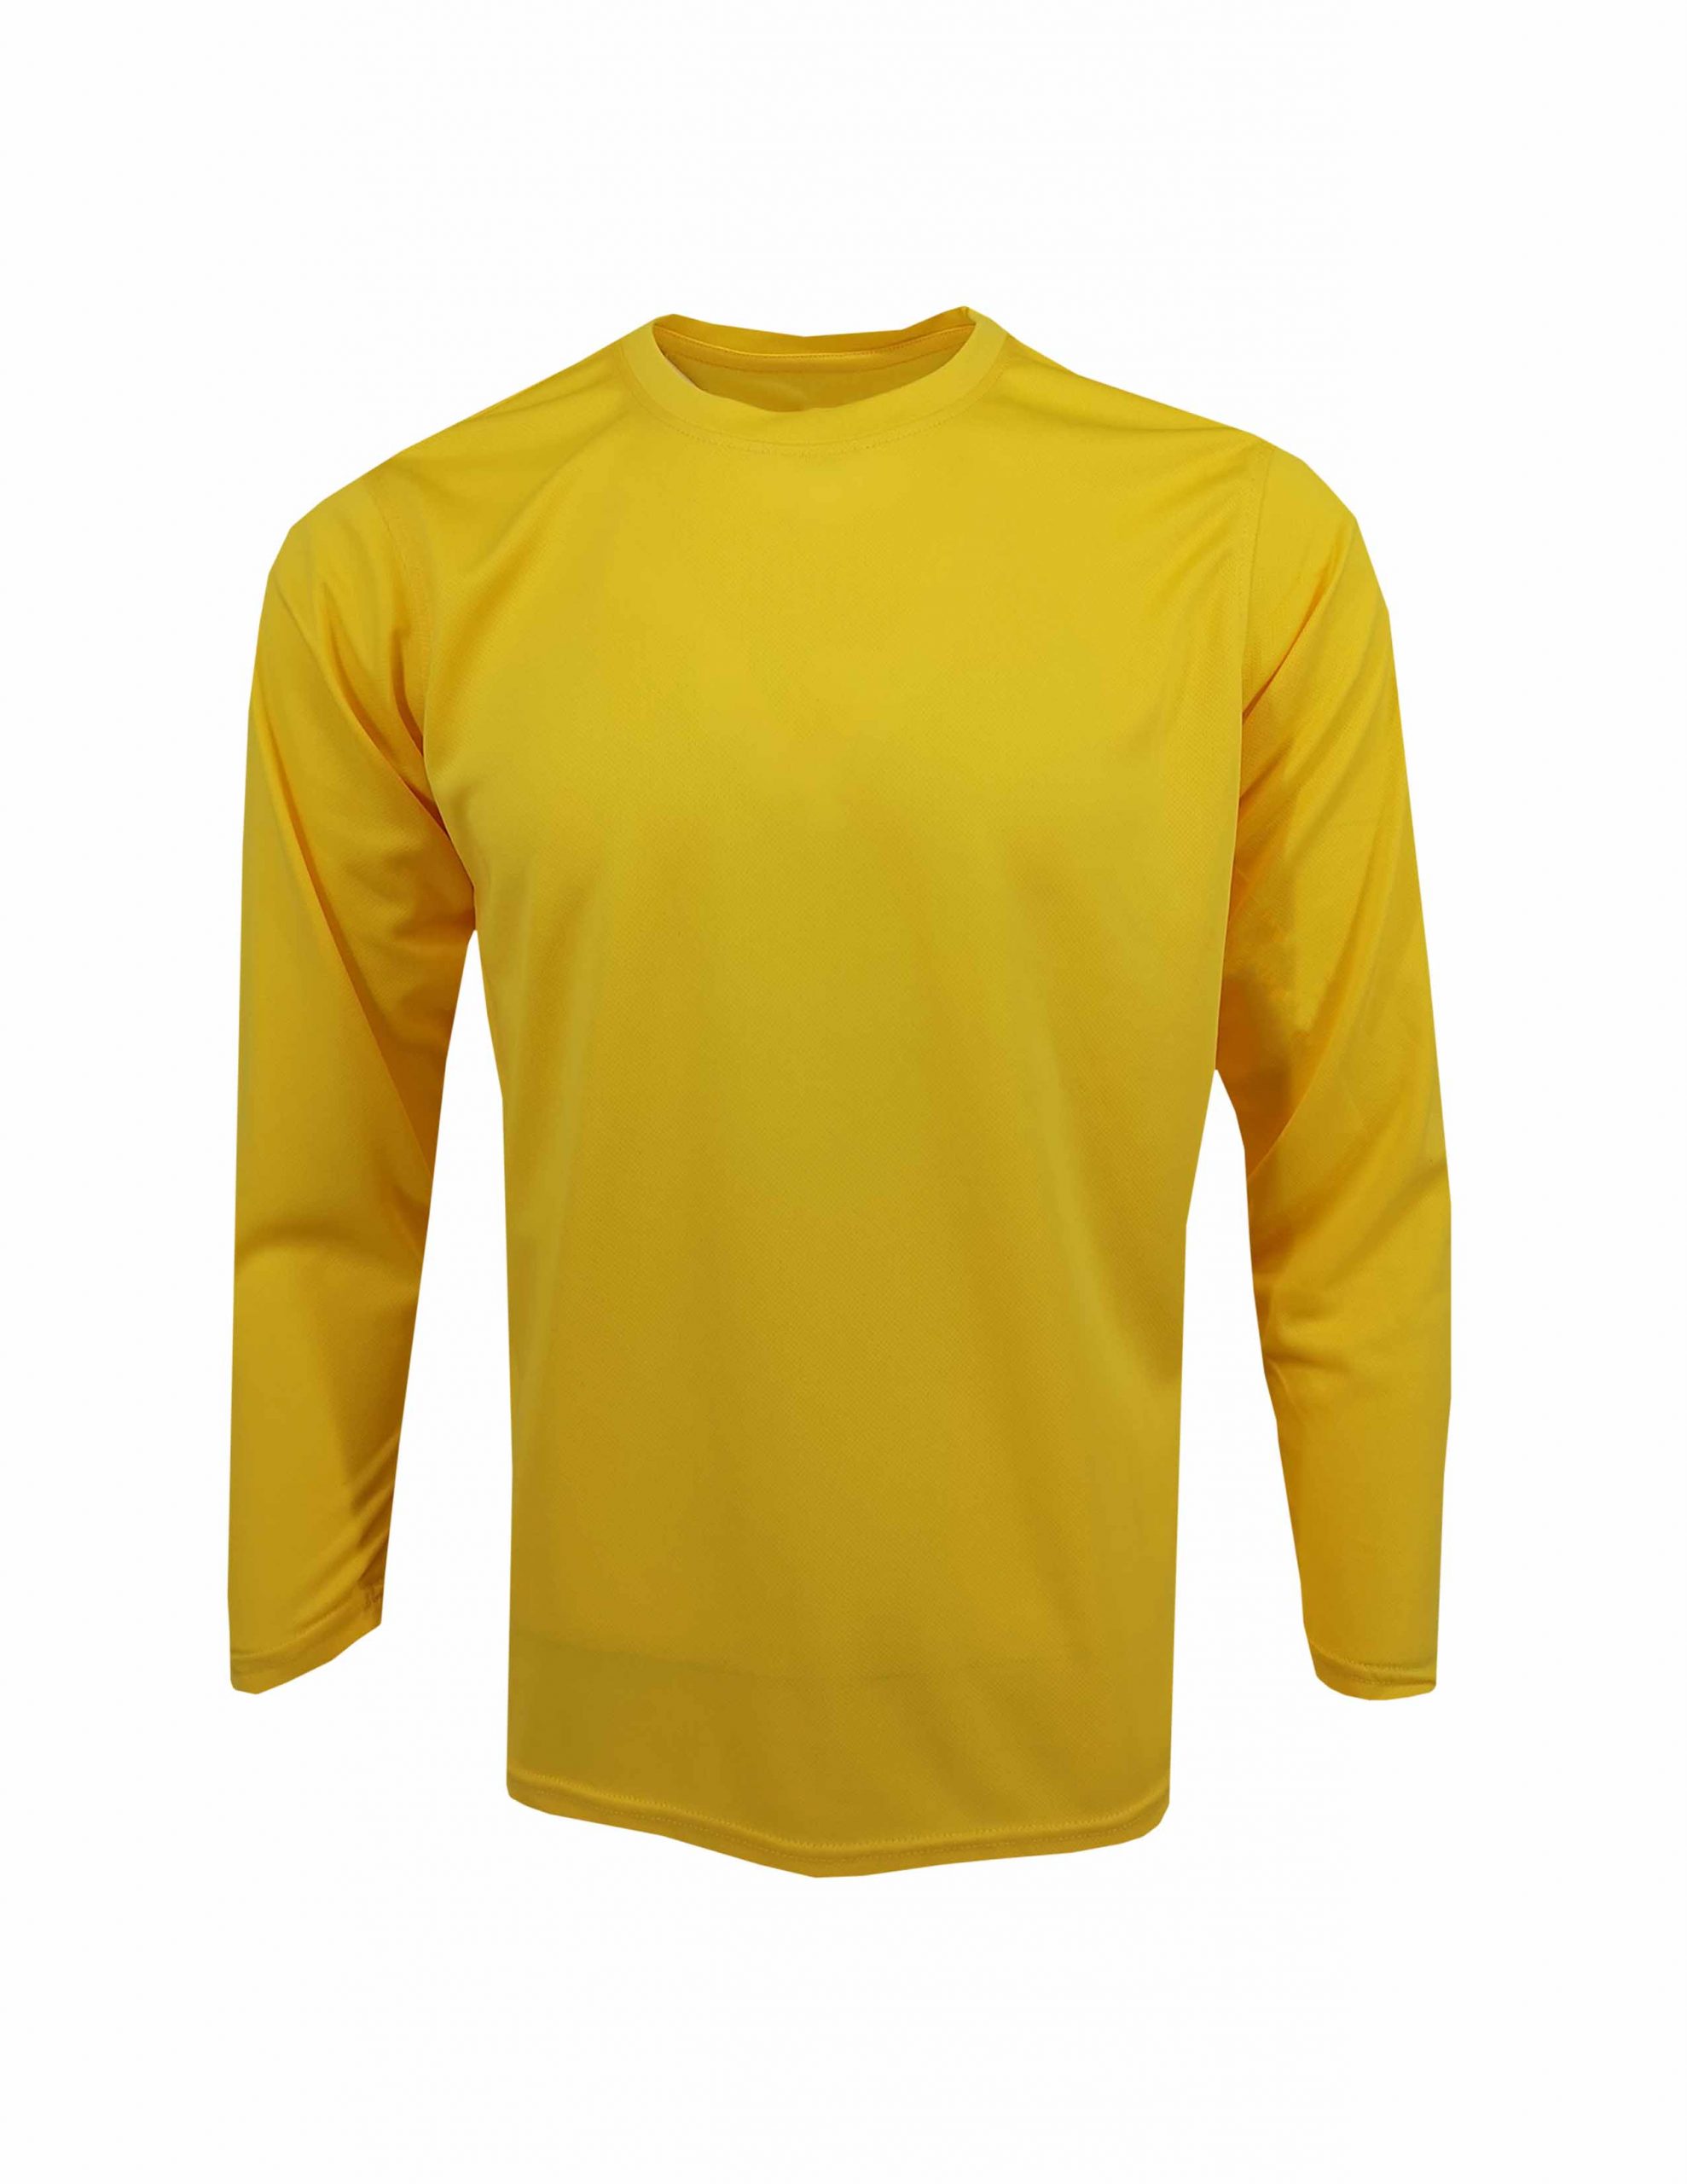 QDL 5403 Lemon Yellow - Rightway Basic T-Shirt | Basic T-Shirt Supplier ...